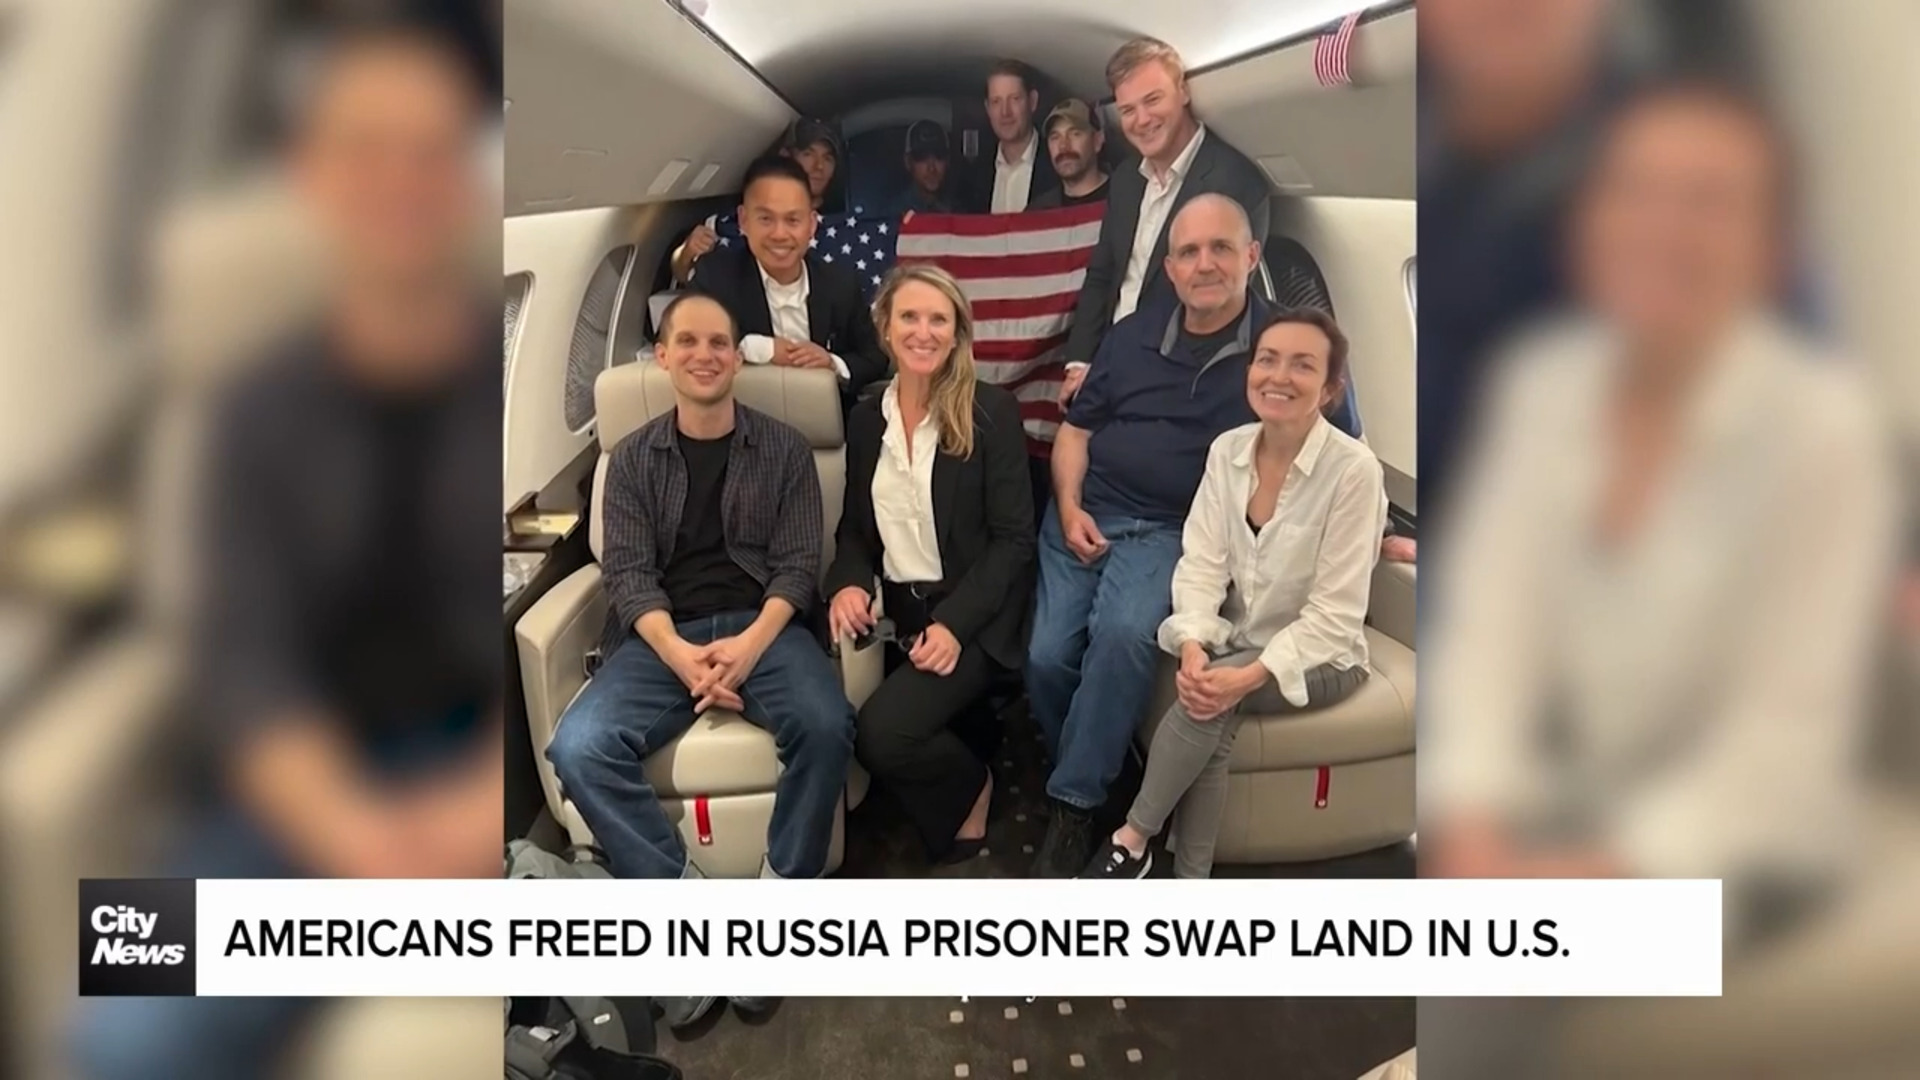 Americans freed in Russia prisoner swap land on U.S. soil